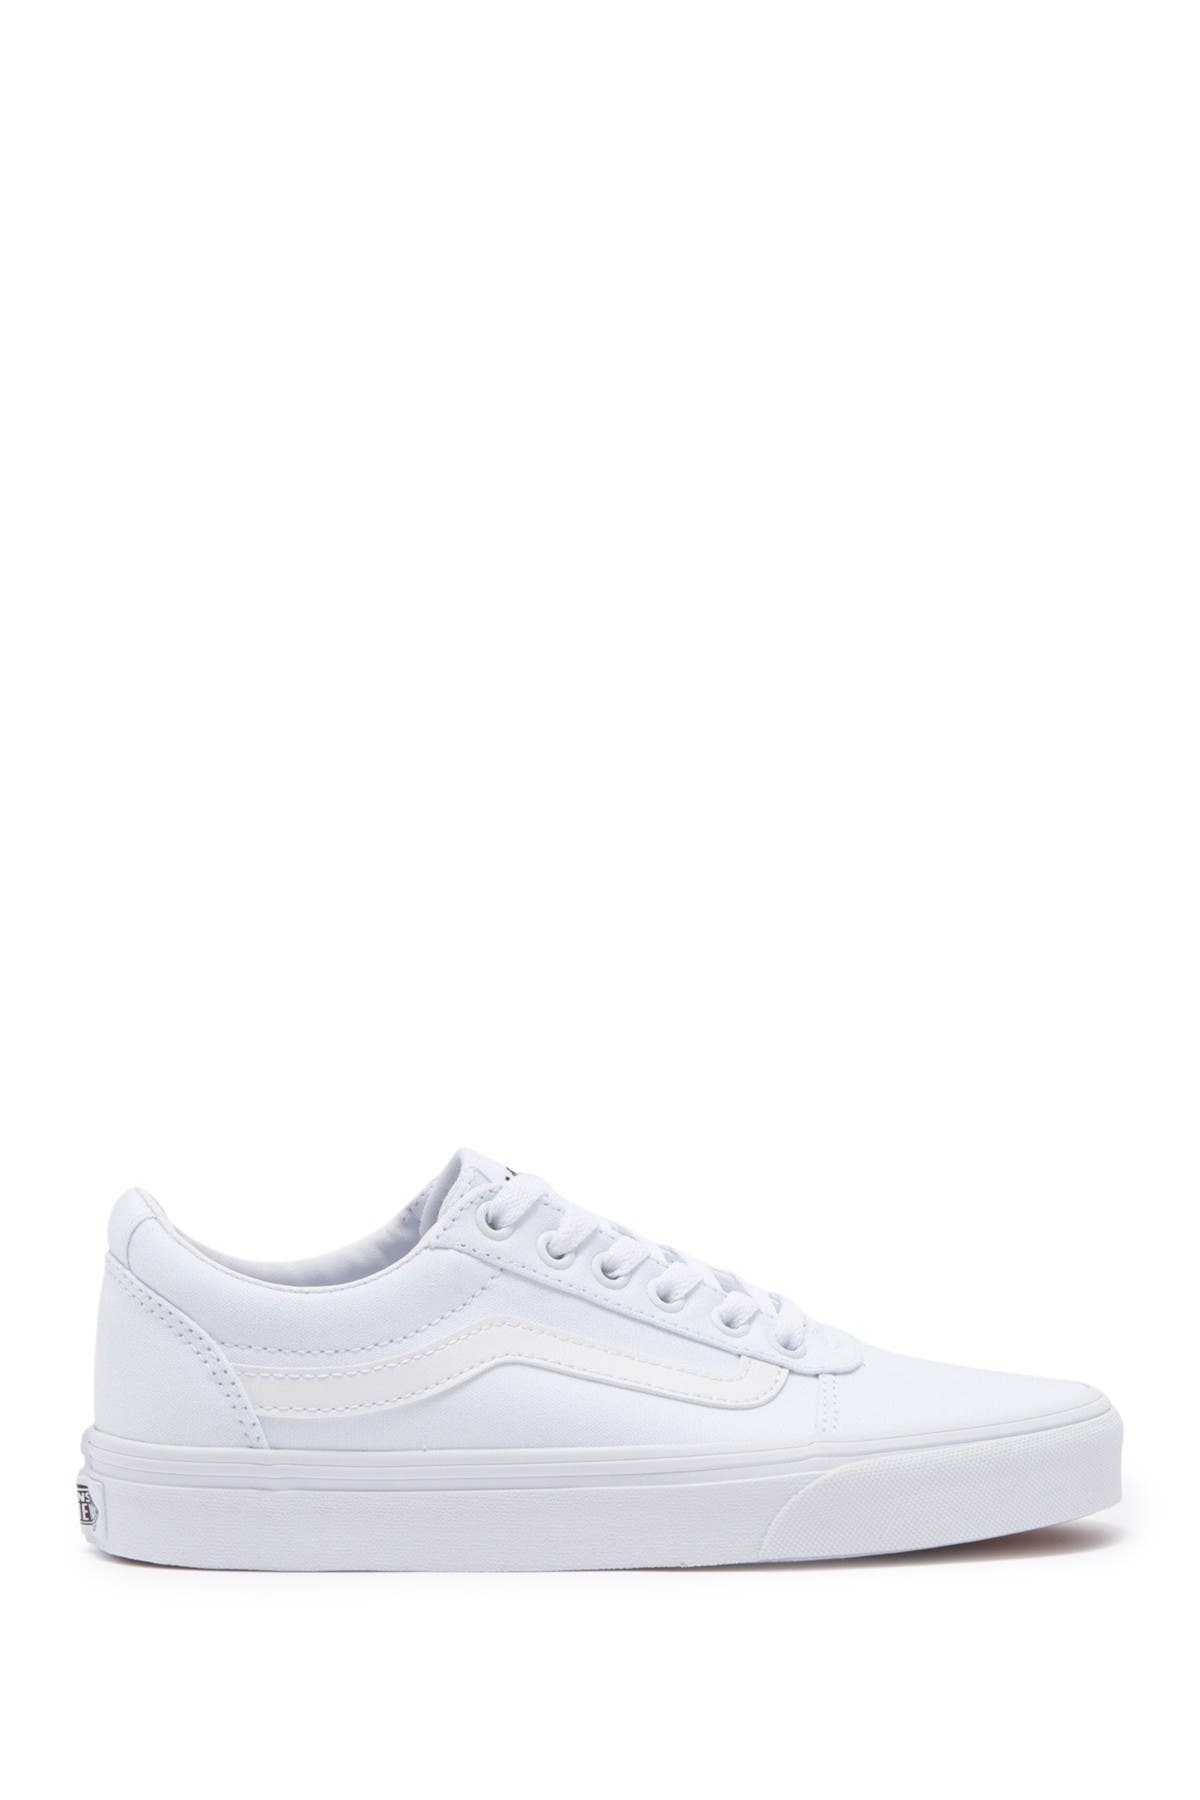 Vans Ward Sneaker In White